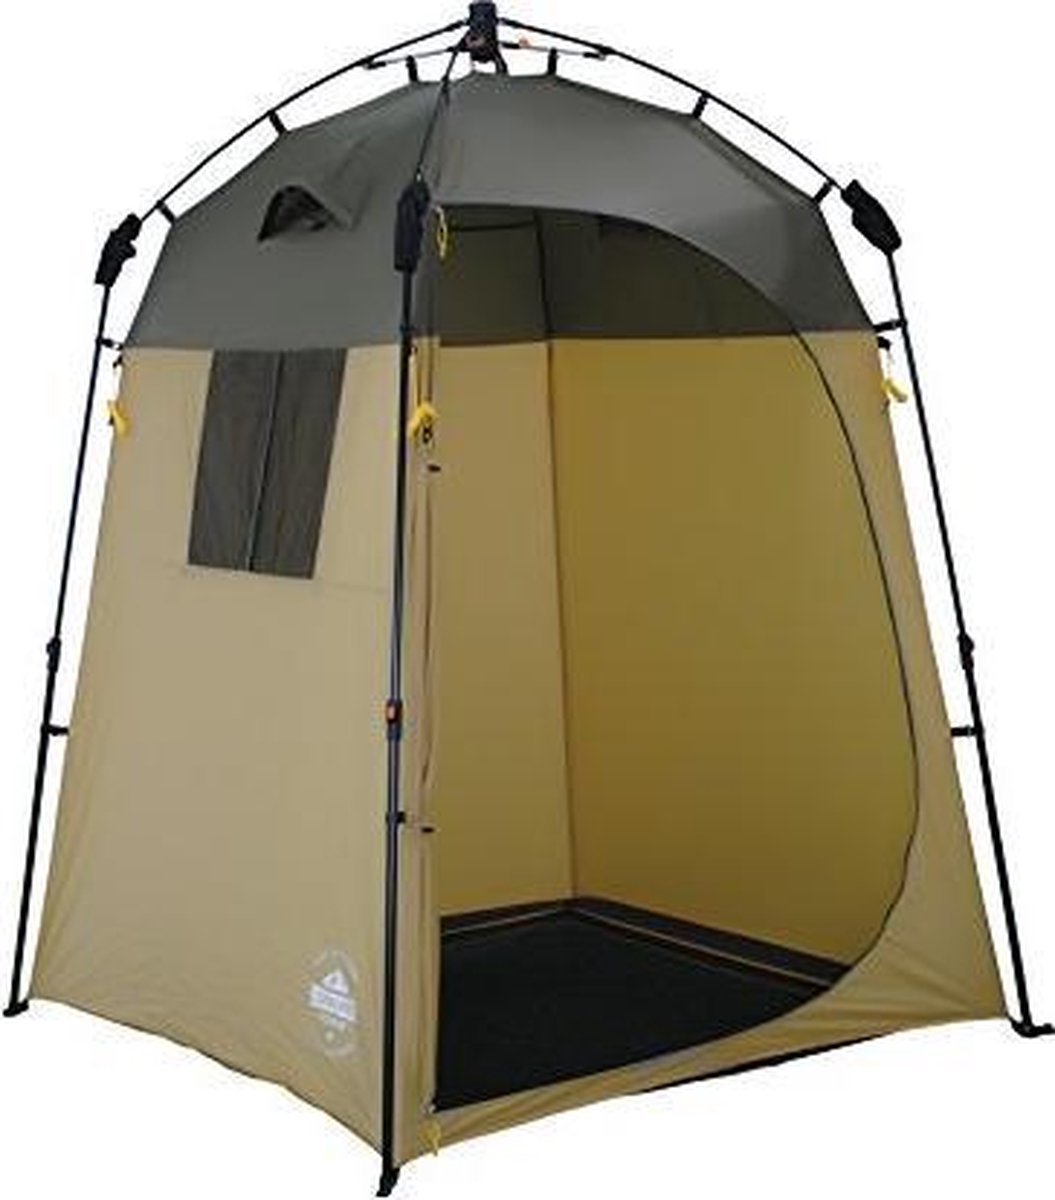 Lumaland - Douche tent - Omkleedtent - Toilet tent - Quick Up System - 155x155x205cm - Bruin